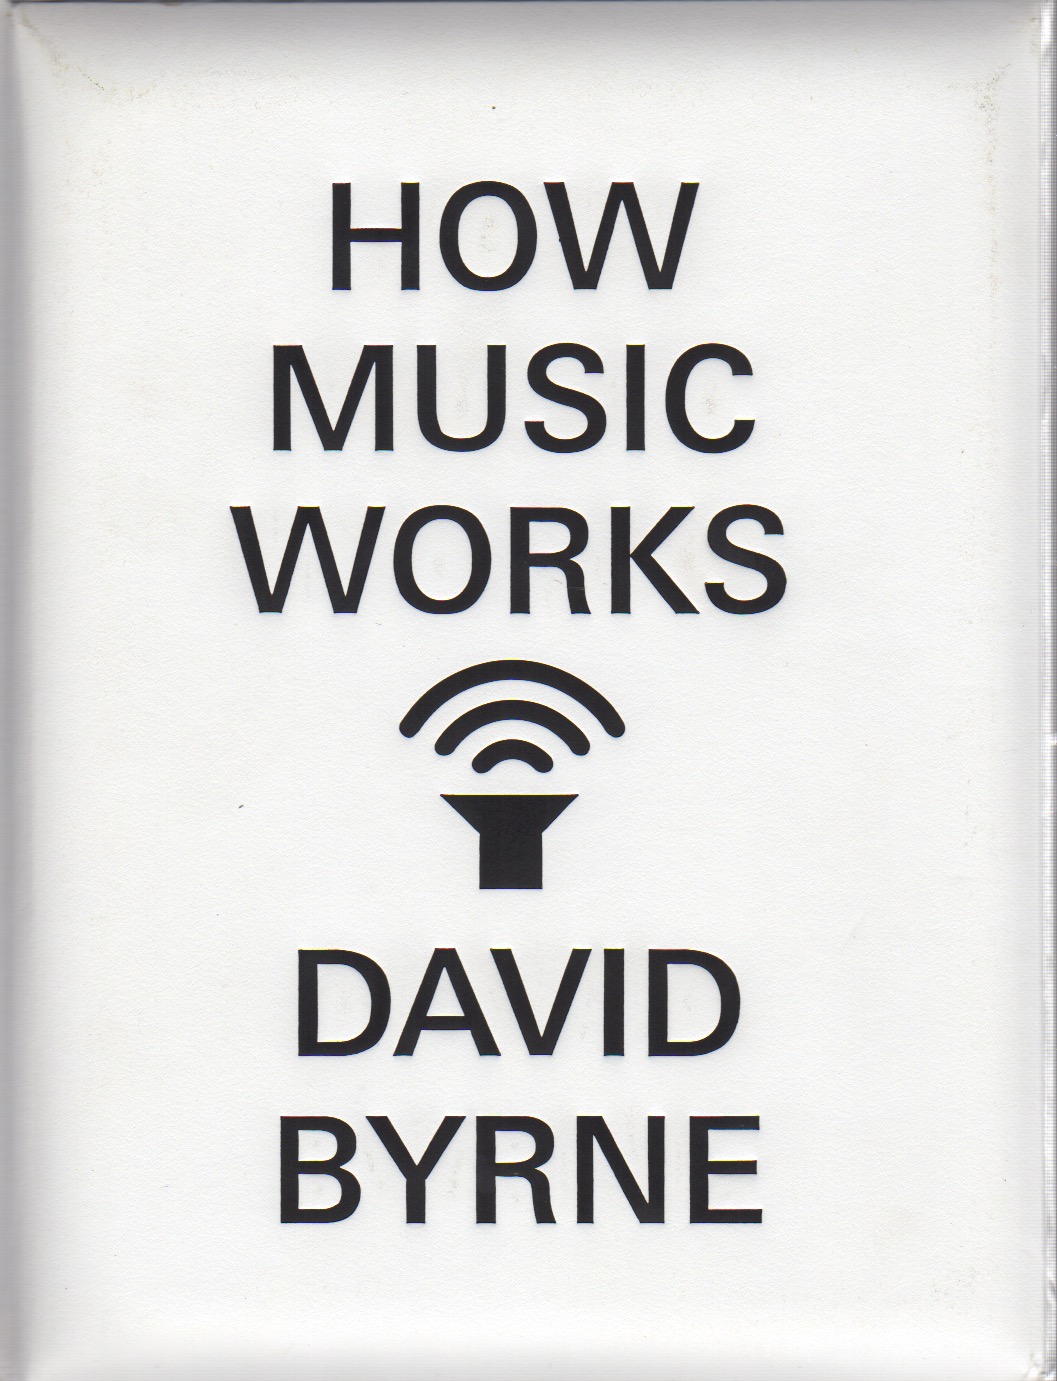 102. BYRNE, David. HOW MUSIC WORKS.